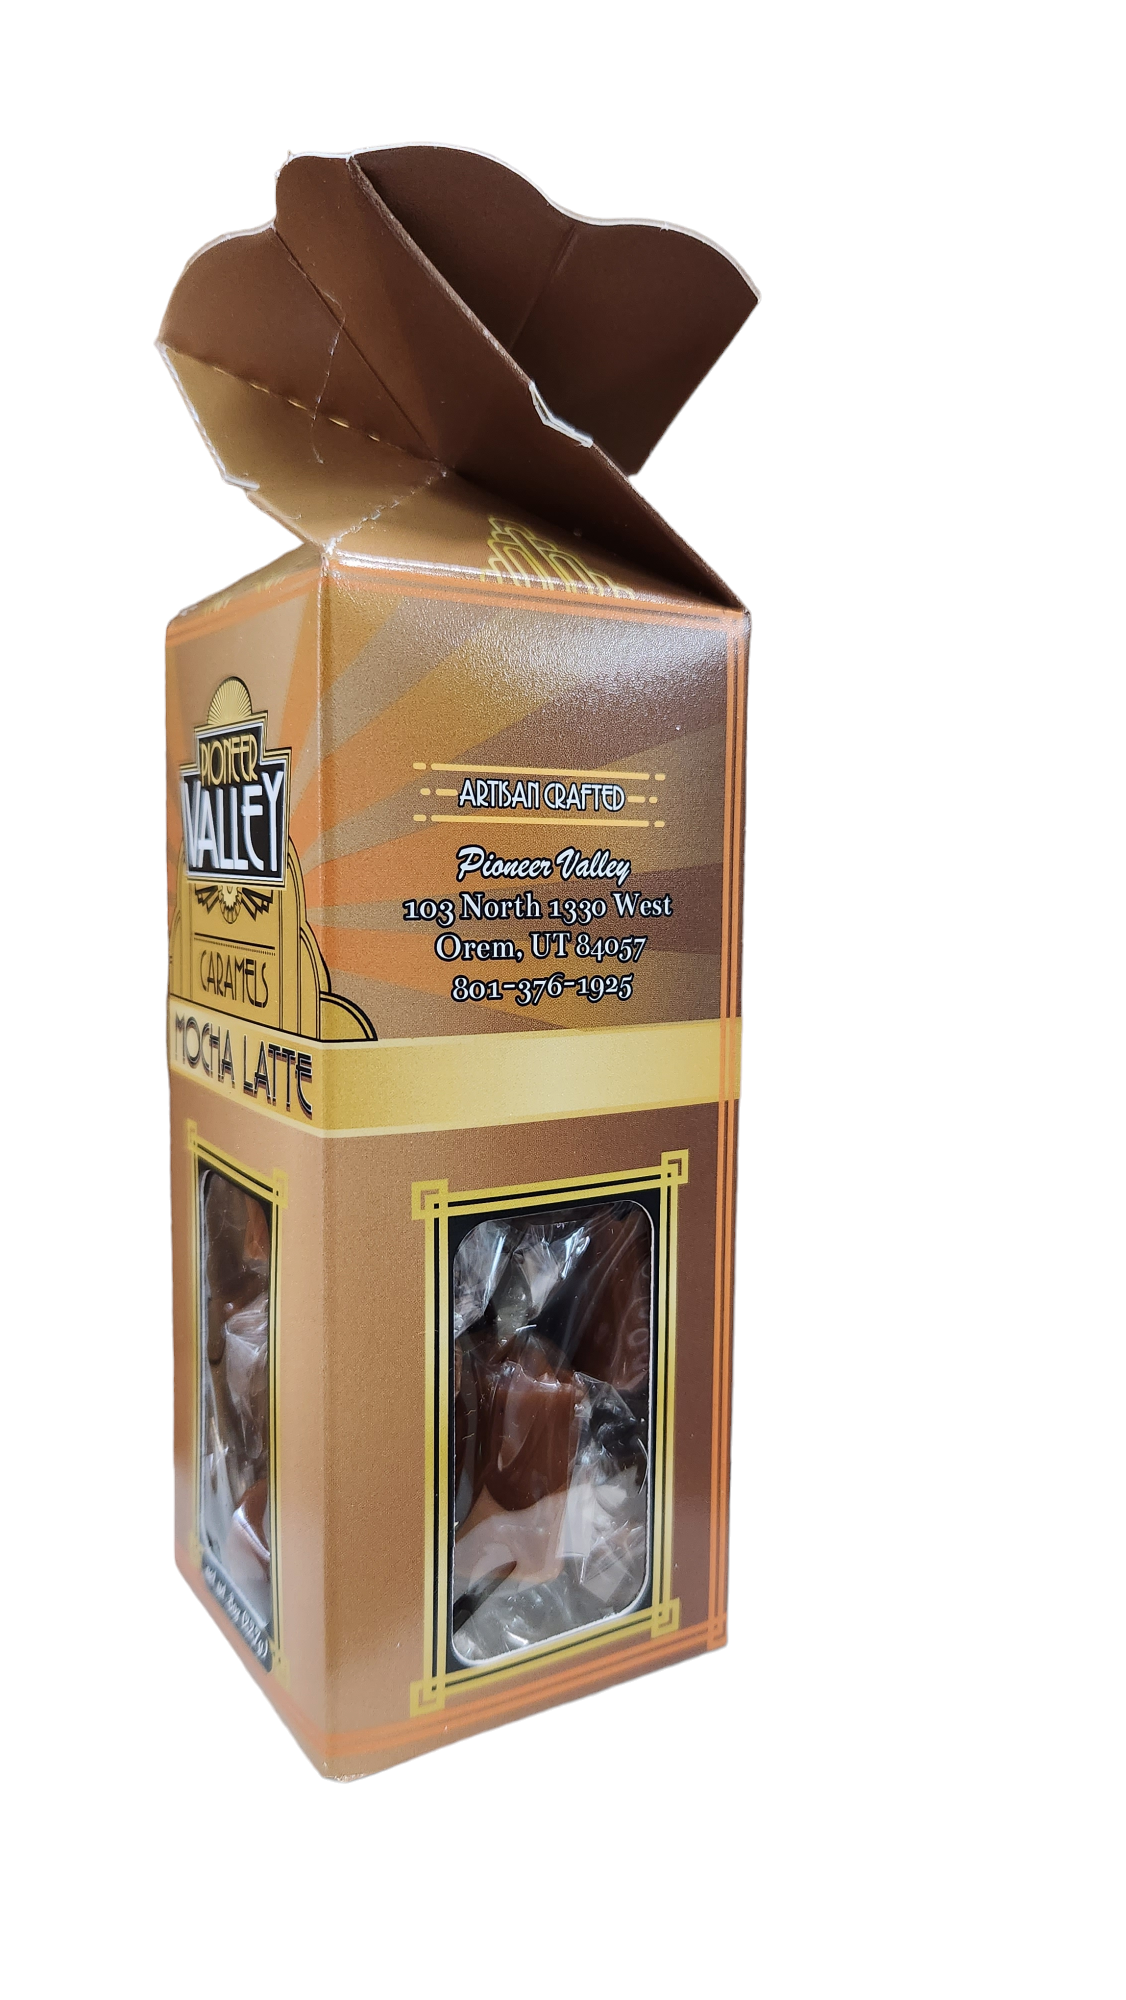 Mocha Latte Caramels - 8oz gift  box